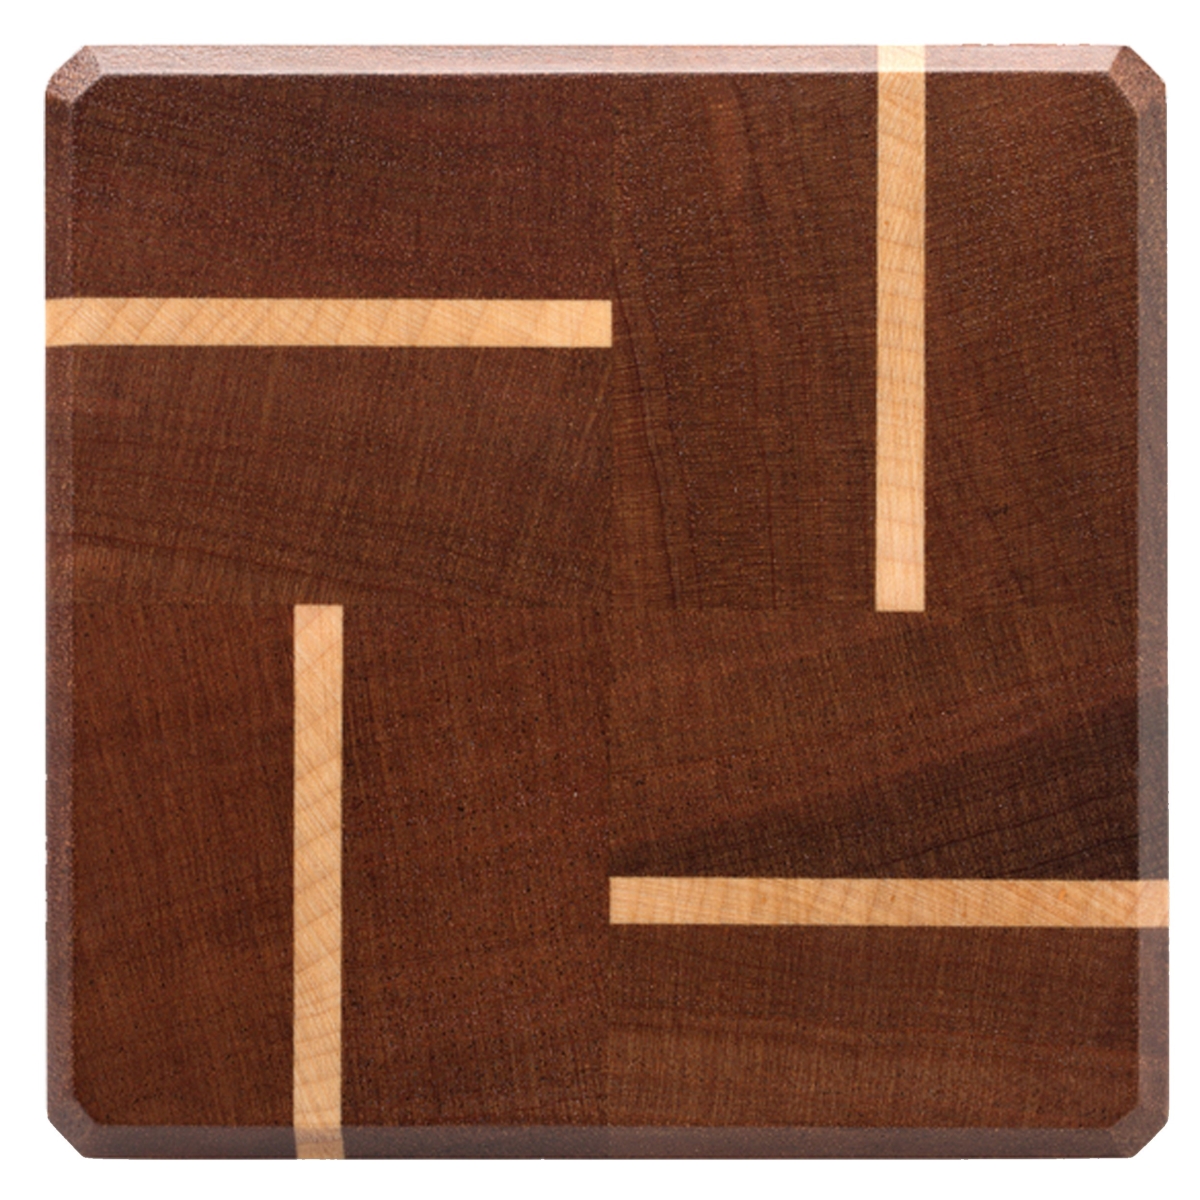 Picture of A & E Millwork AEM-5046 Single Oak & Maple Wood Coasters